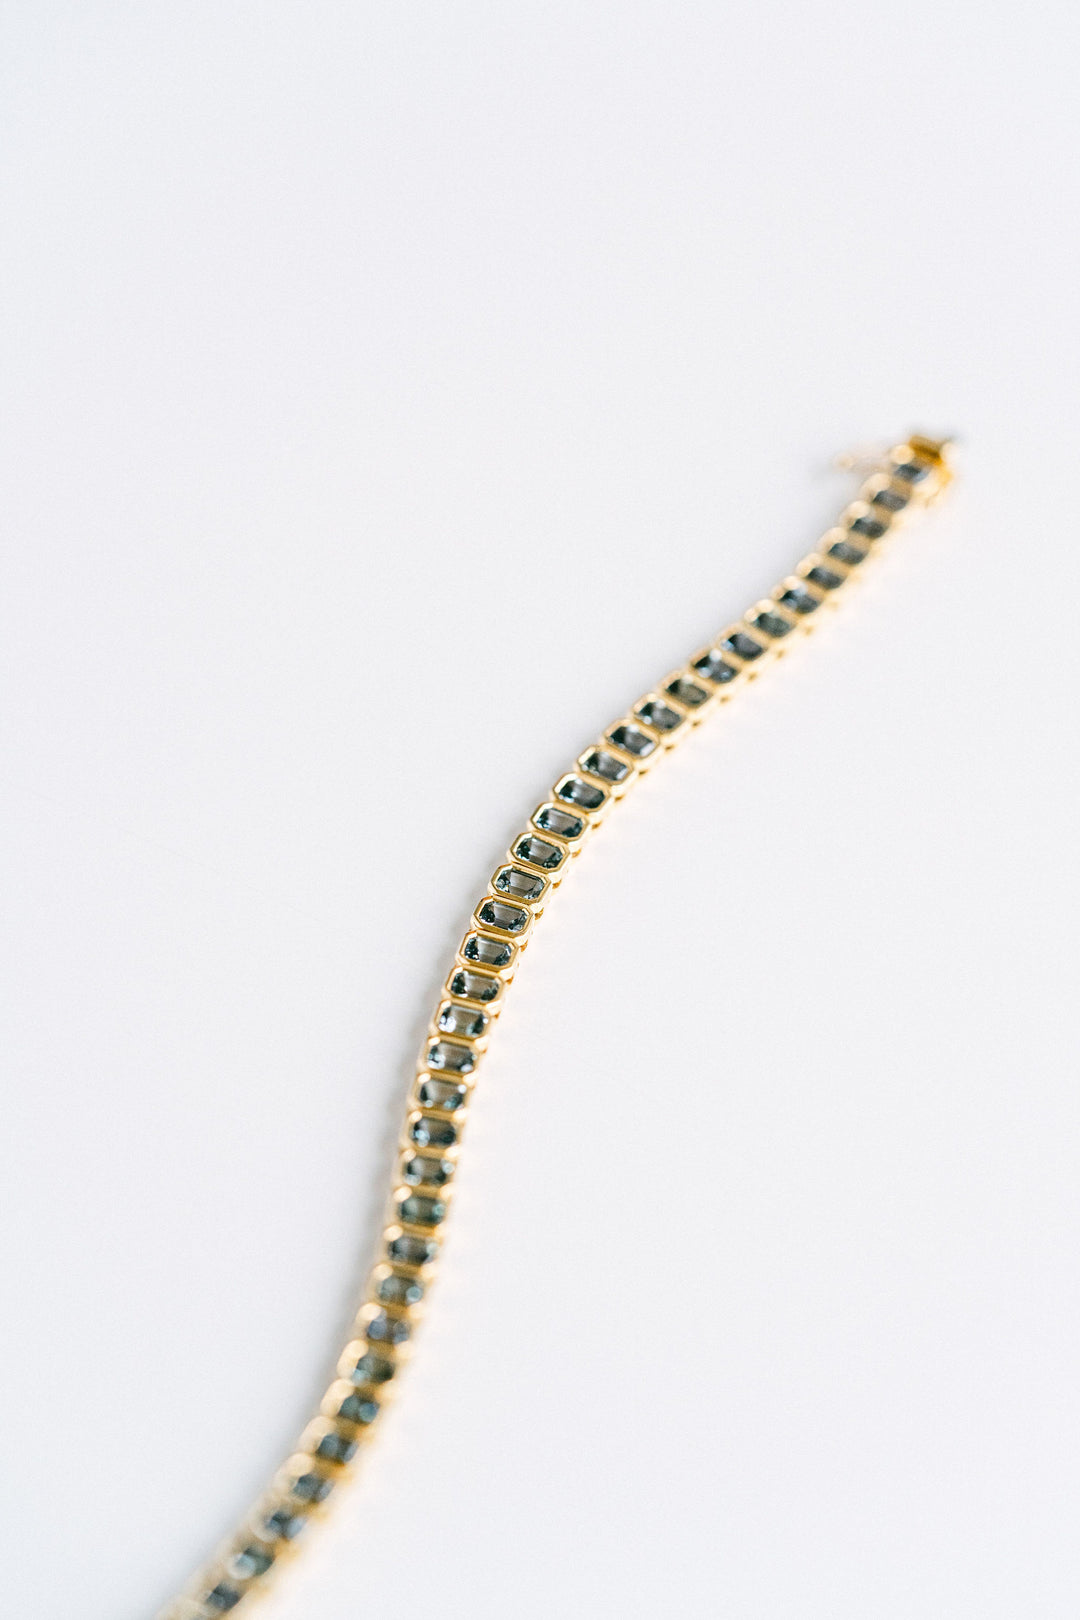 9.21ctw. Emerald Cut Blue-Green Sri Lankan Sapphire Bezel Tennis Bracelet, 14k Yellow Gold